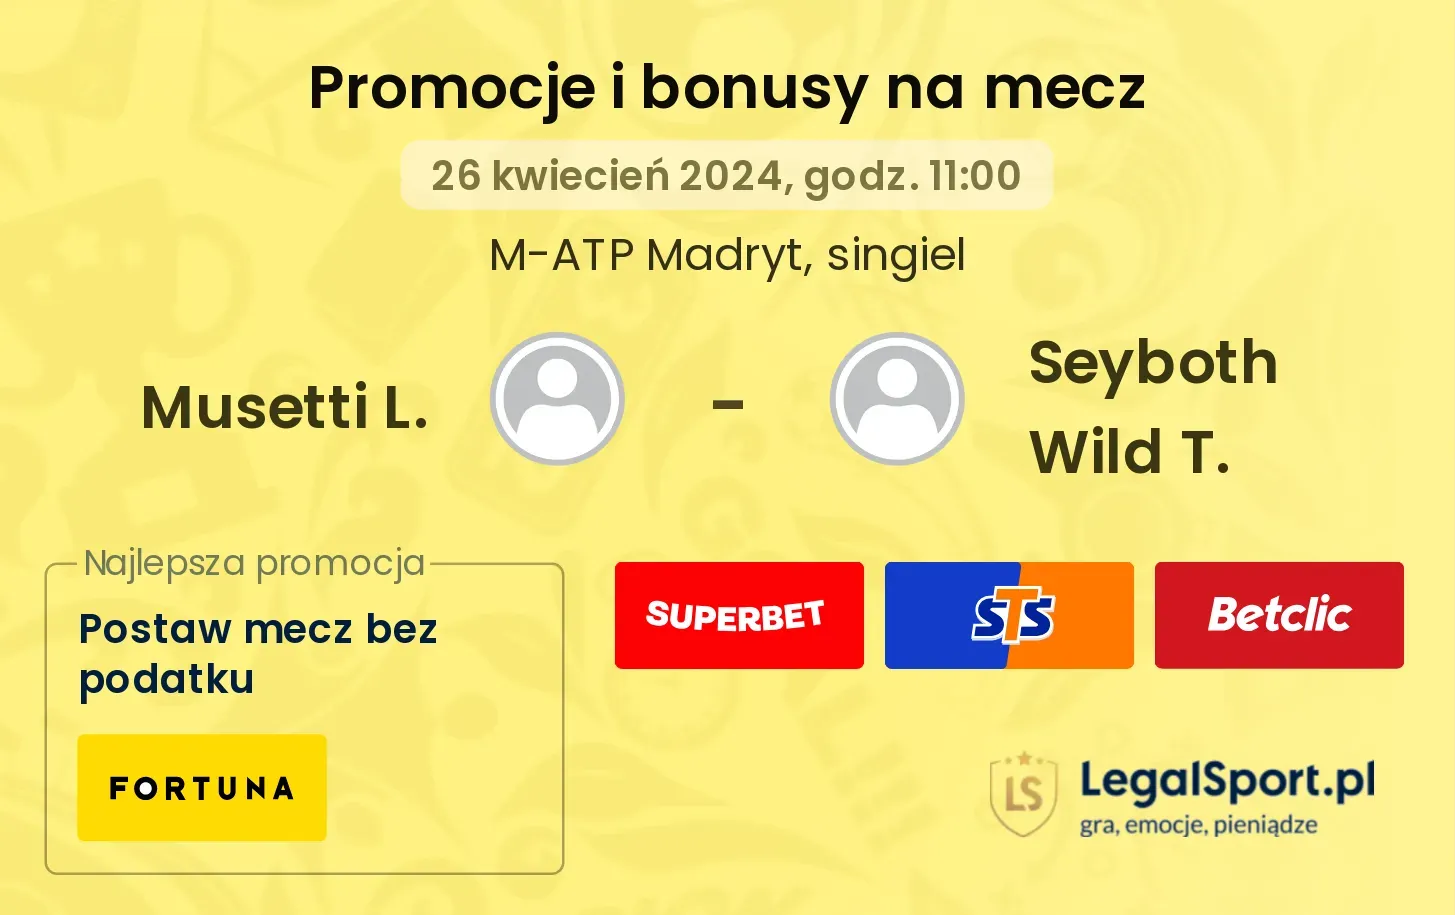 Musetti L. - Seyboth Wild T. promocje bonusy na mecz